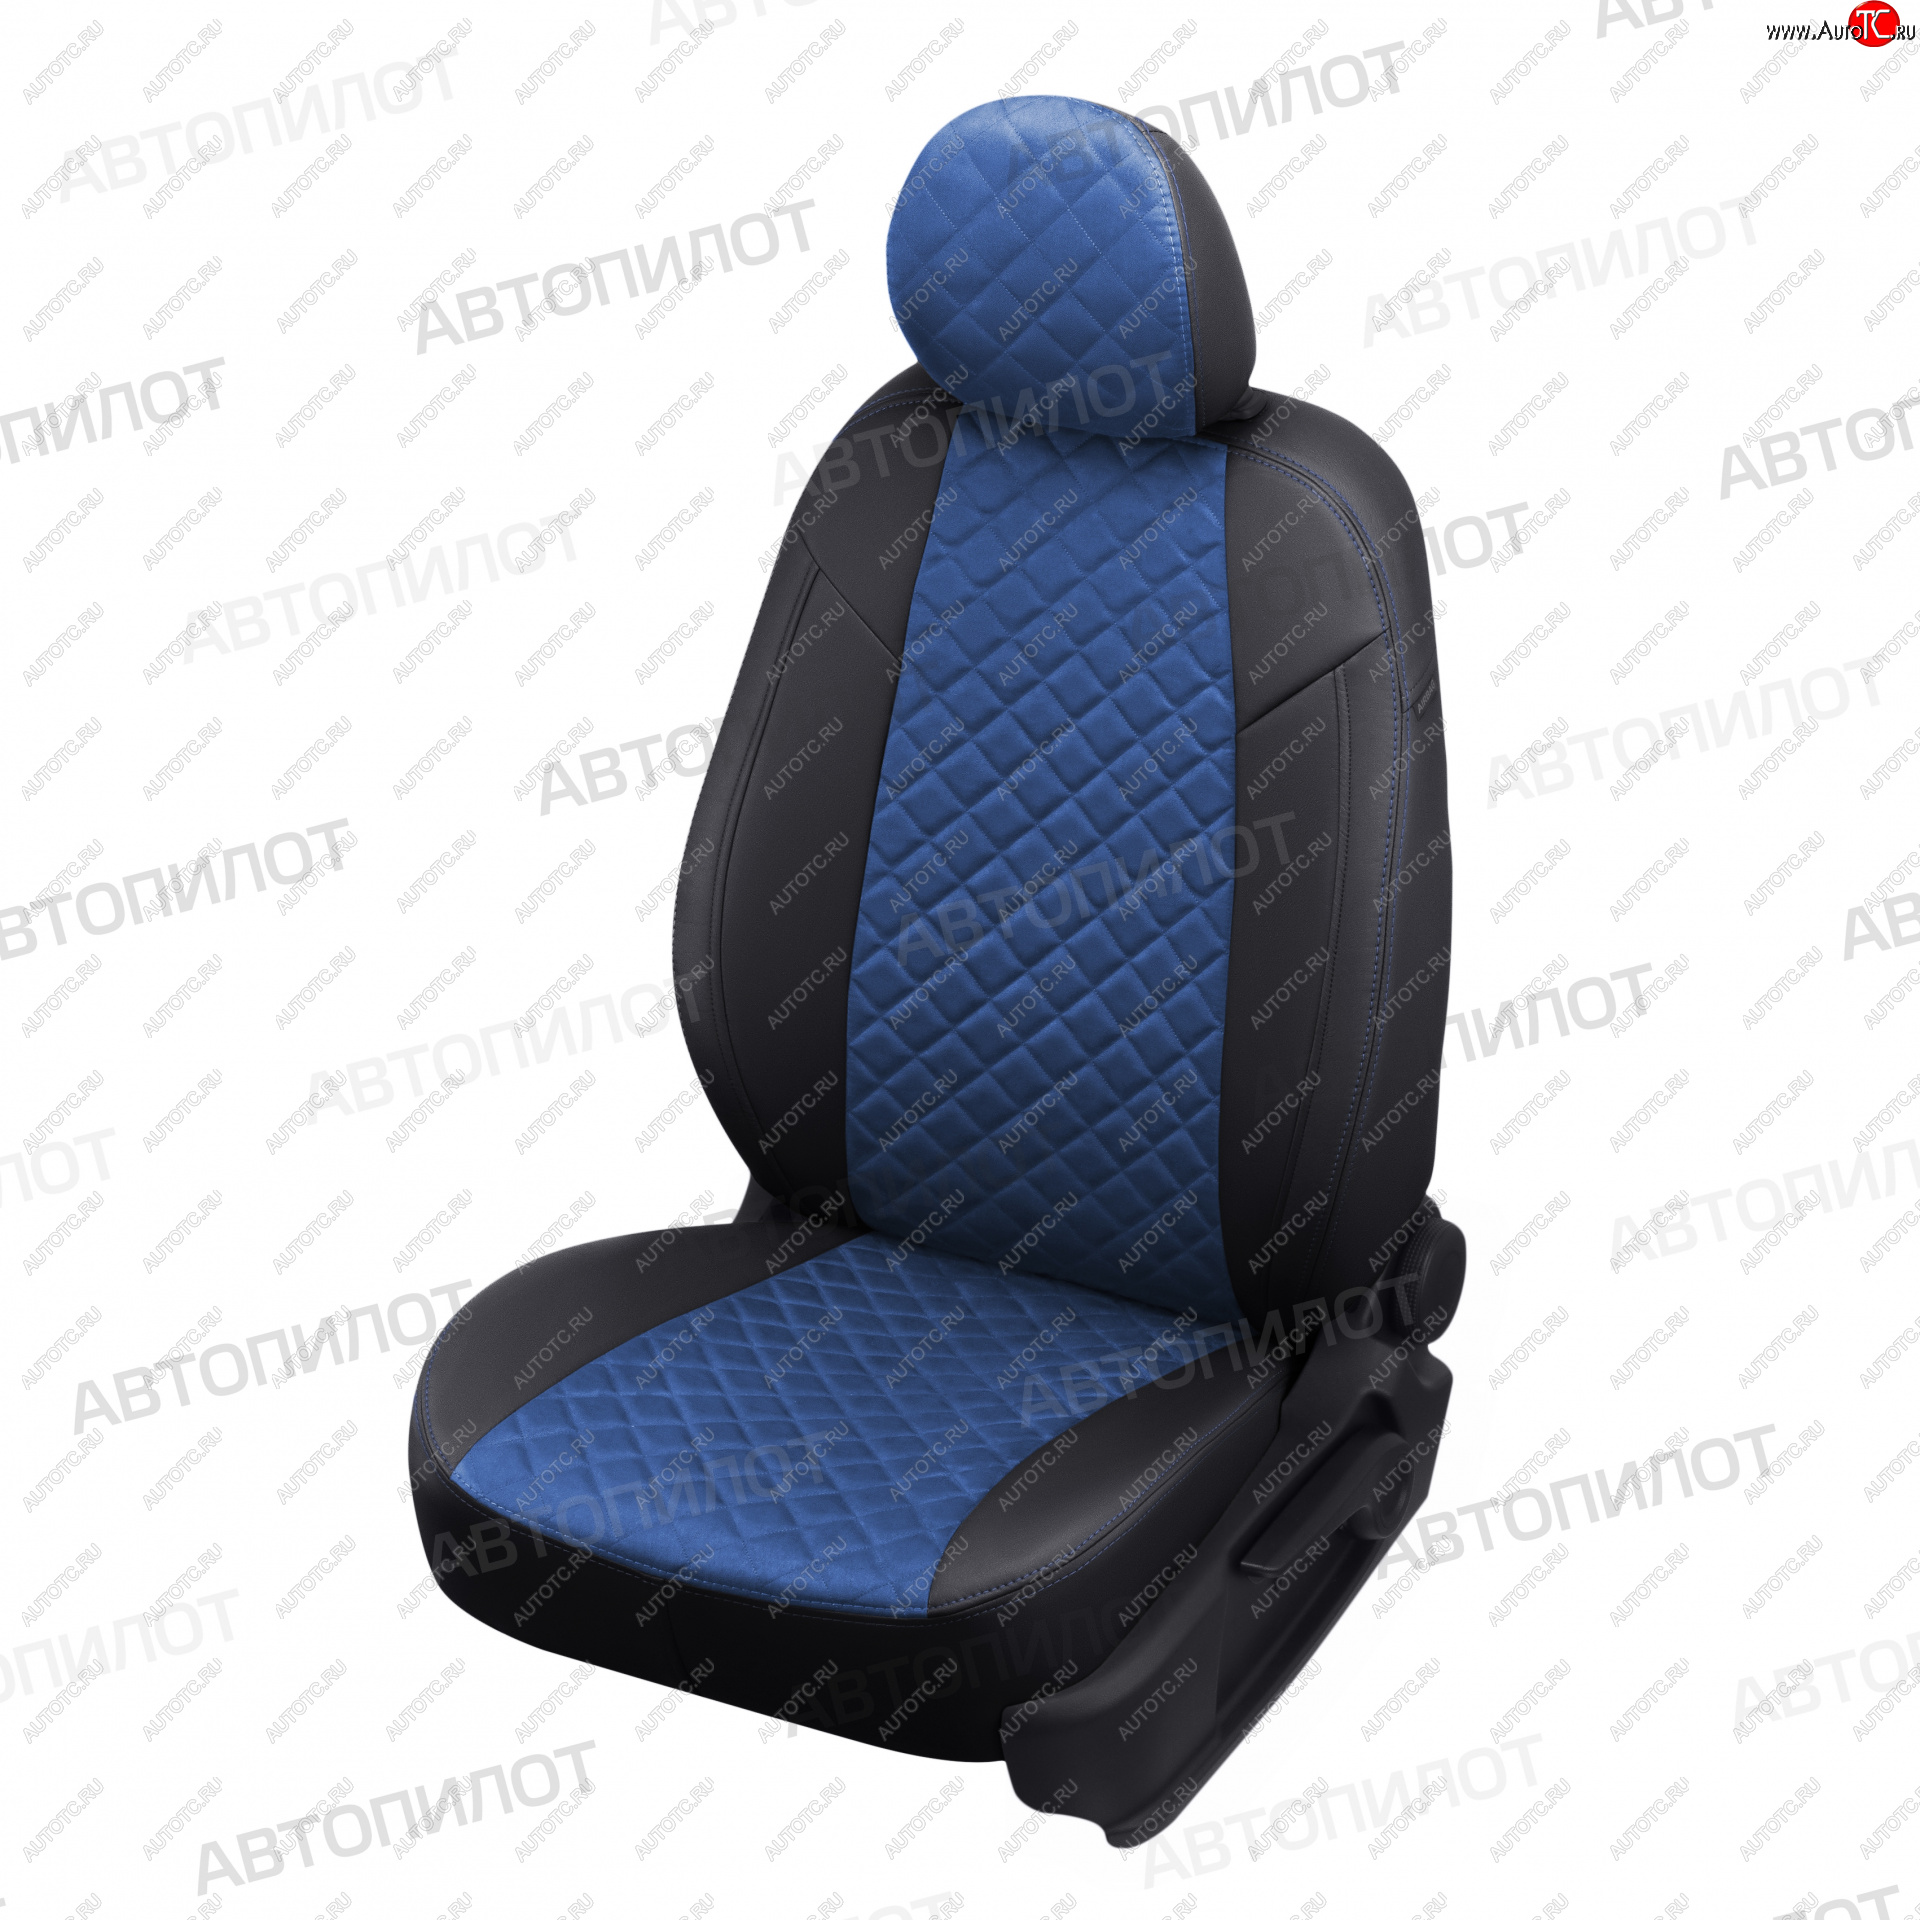 13 999 р. Чехлы сидений (экокожа/алькантара) Автопилот Ромб  KIA Venga (2009-2024) (черный/синий)